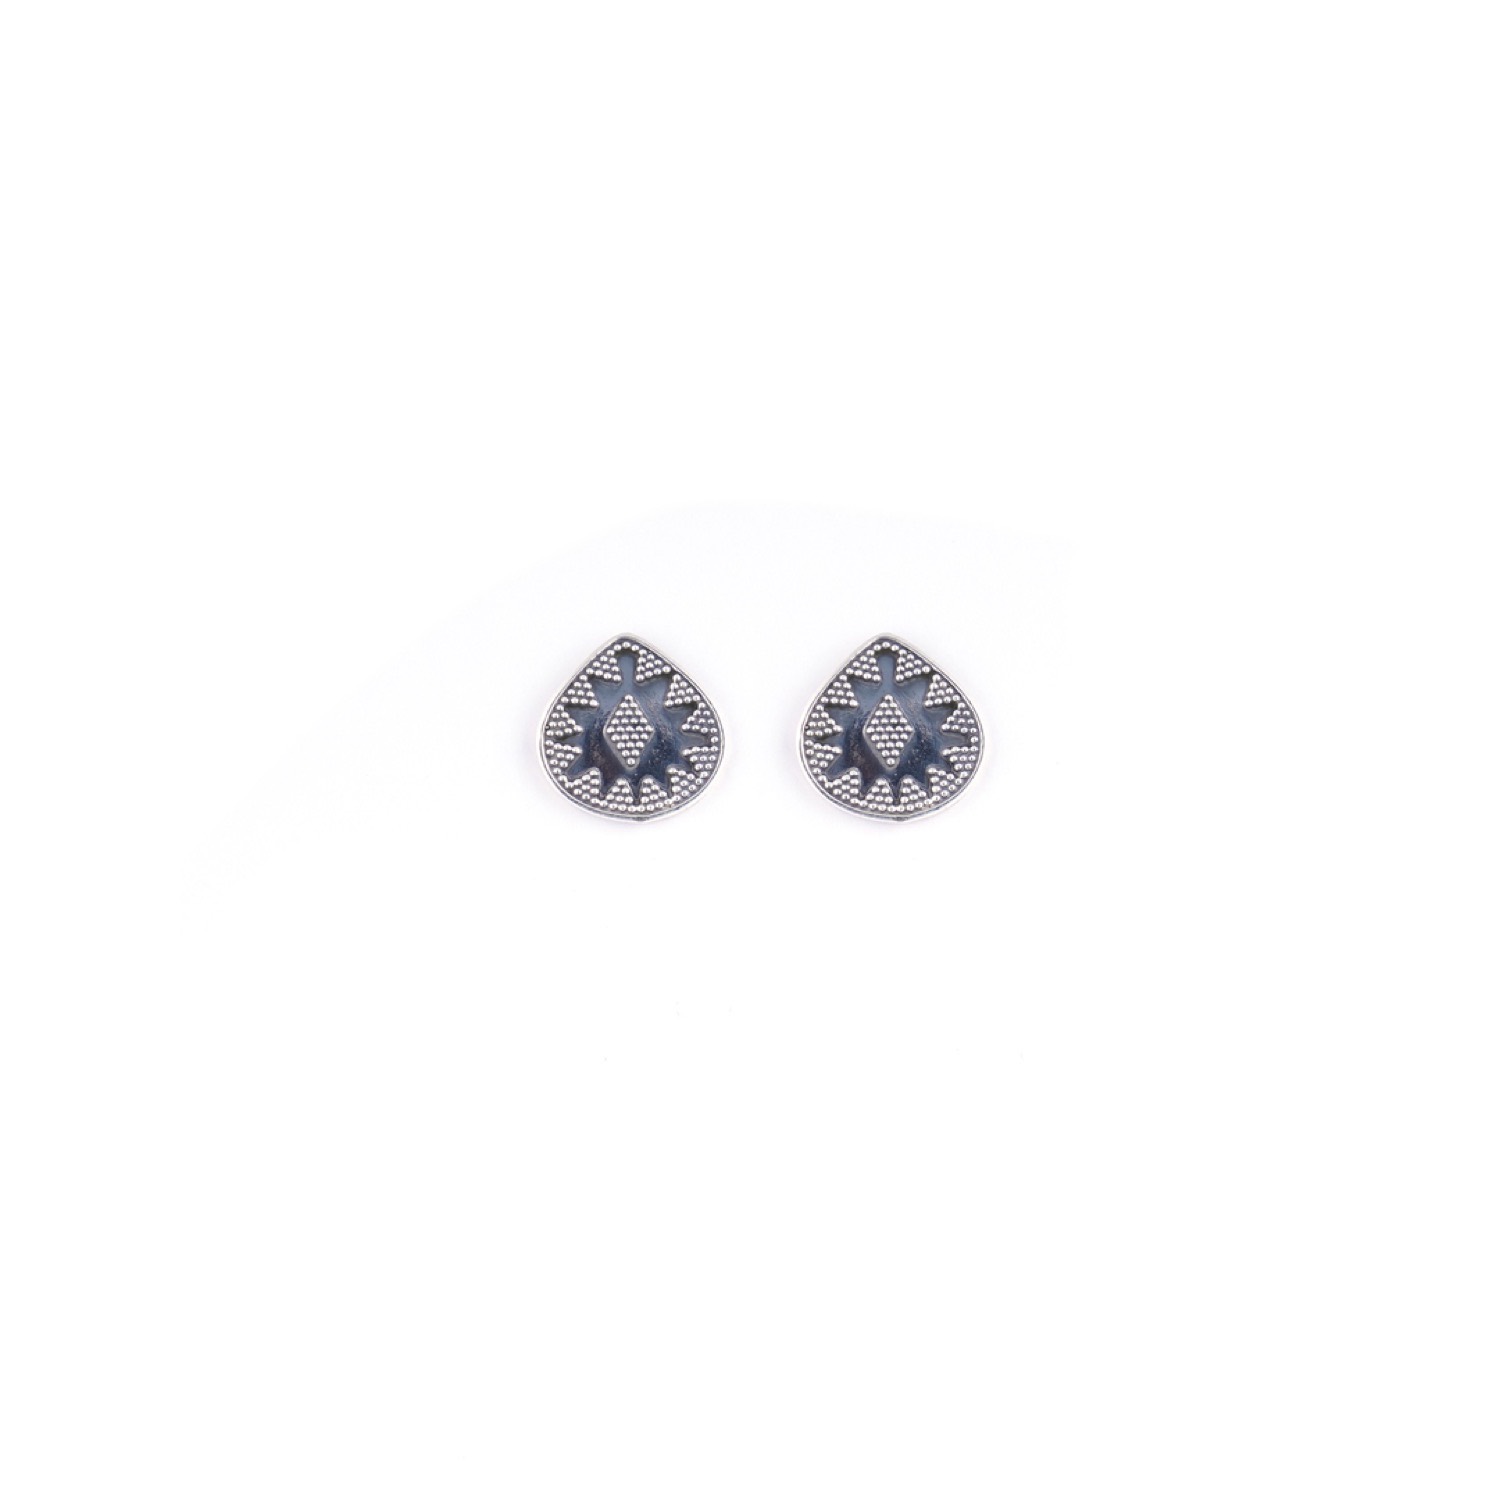 varam_earrings_102022_pear_shape_oxidised_silver_earrings-1